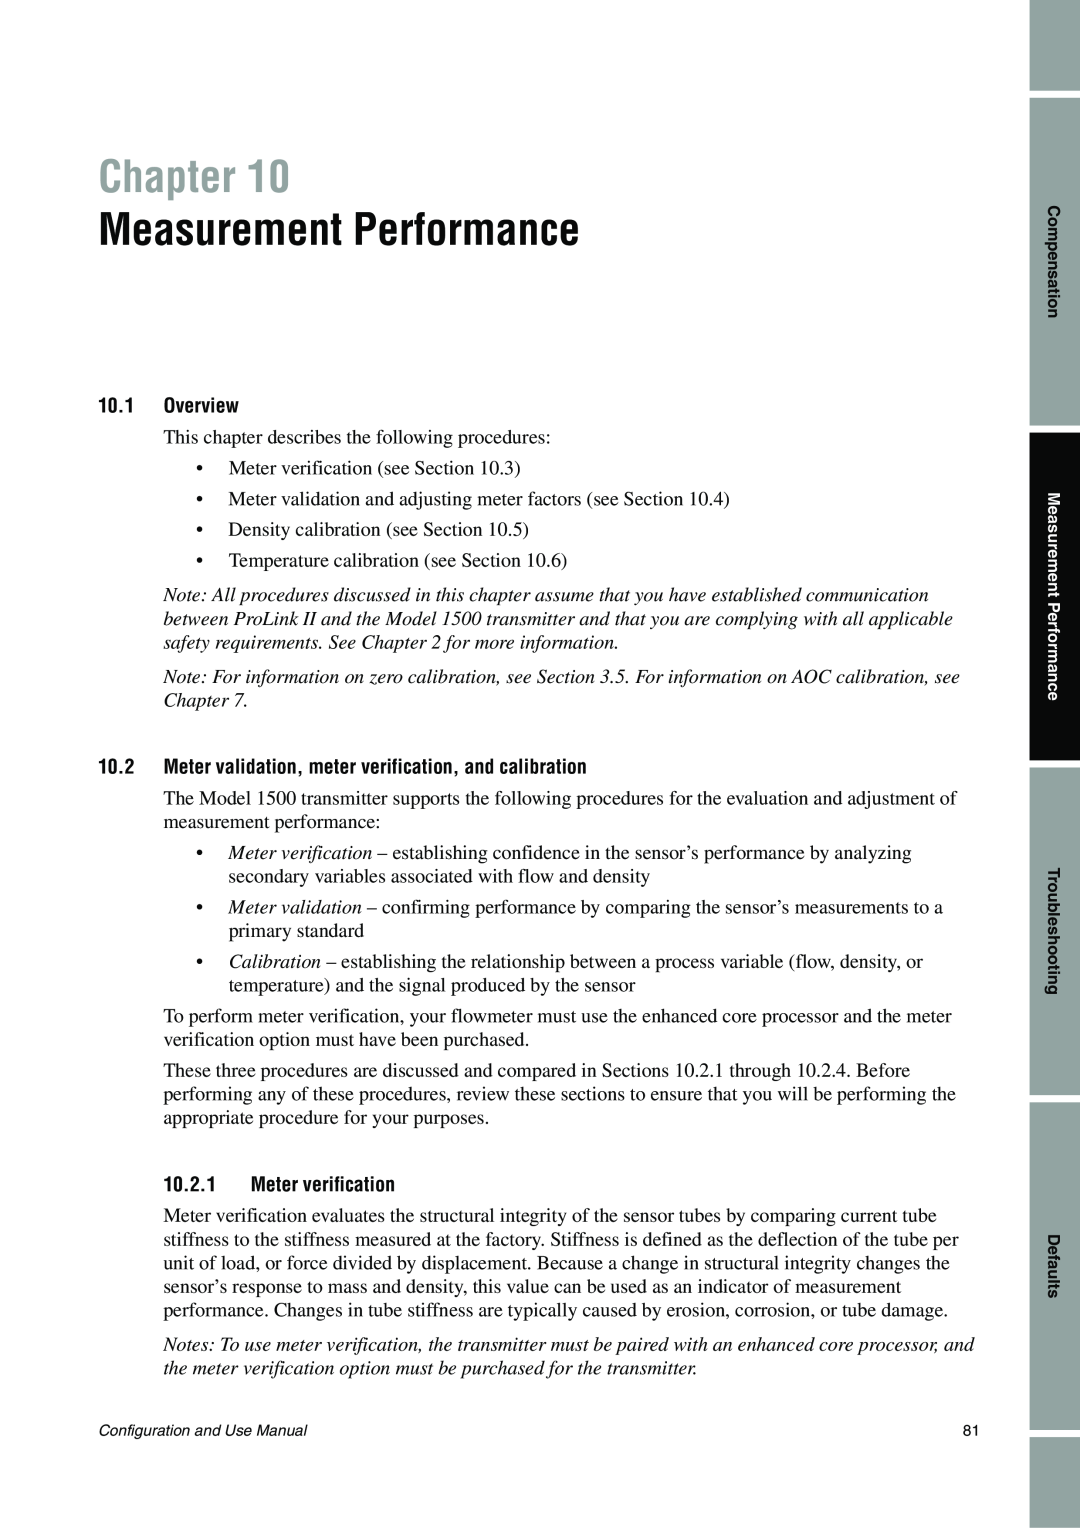 Emerson Process Management 1500 manual Measurement Performance, Chapter, 10.1Overview, 10.2.1Meter verification 